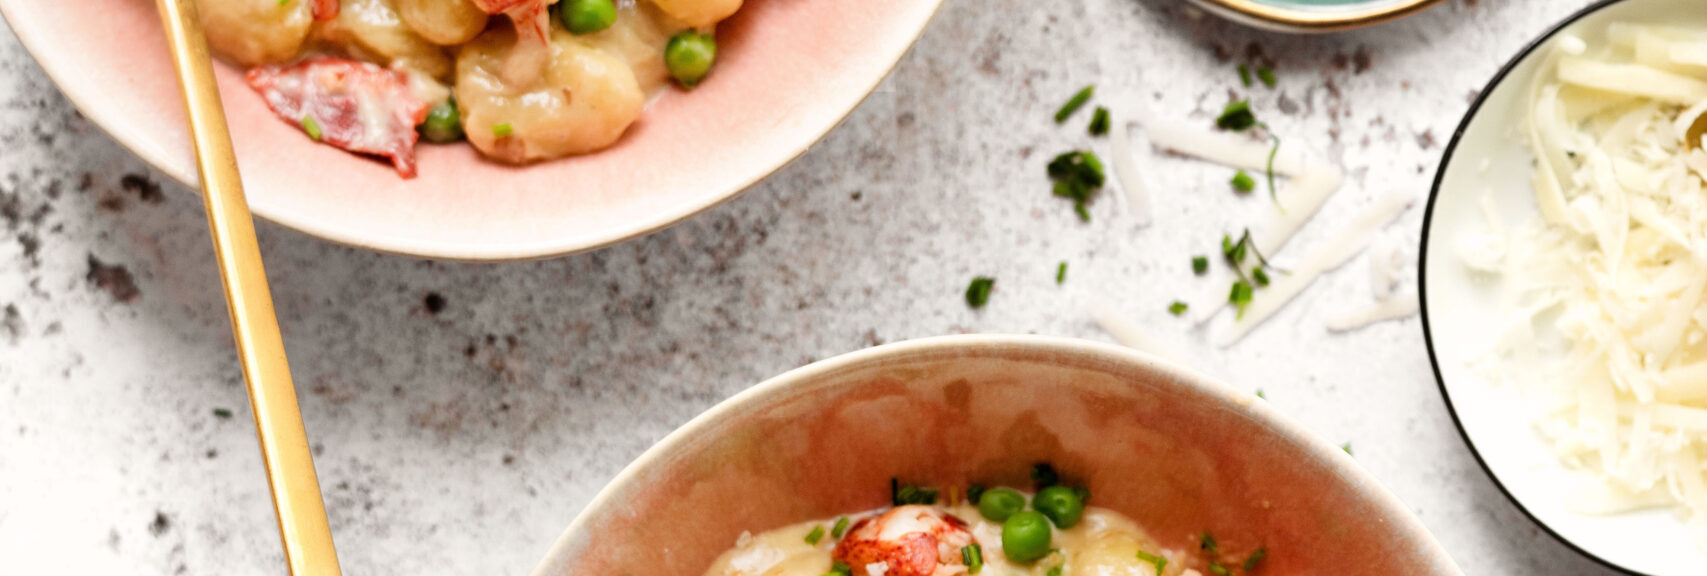 Creamy Gnocchi with Maine Lobster and Crispy Prosciutto and Peas recipe image